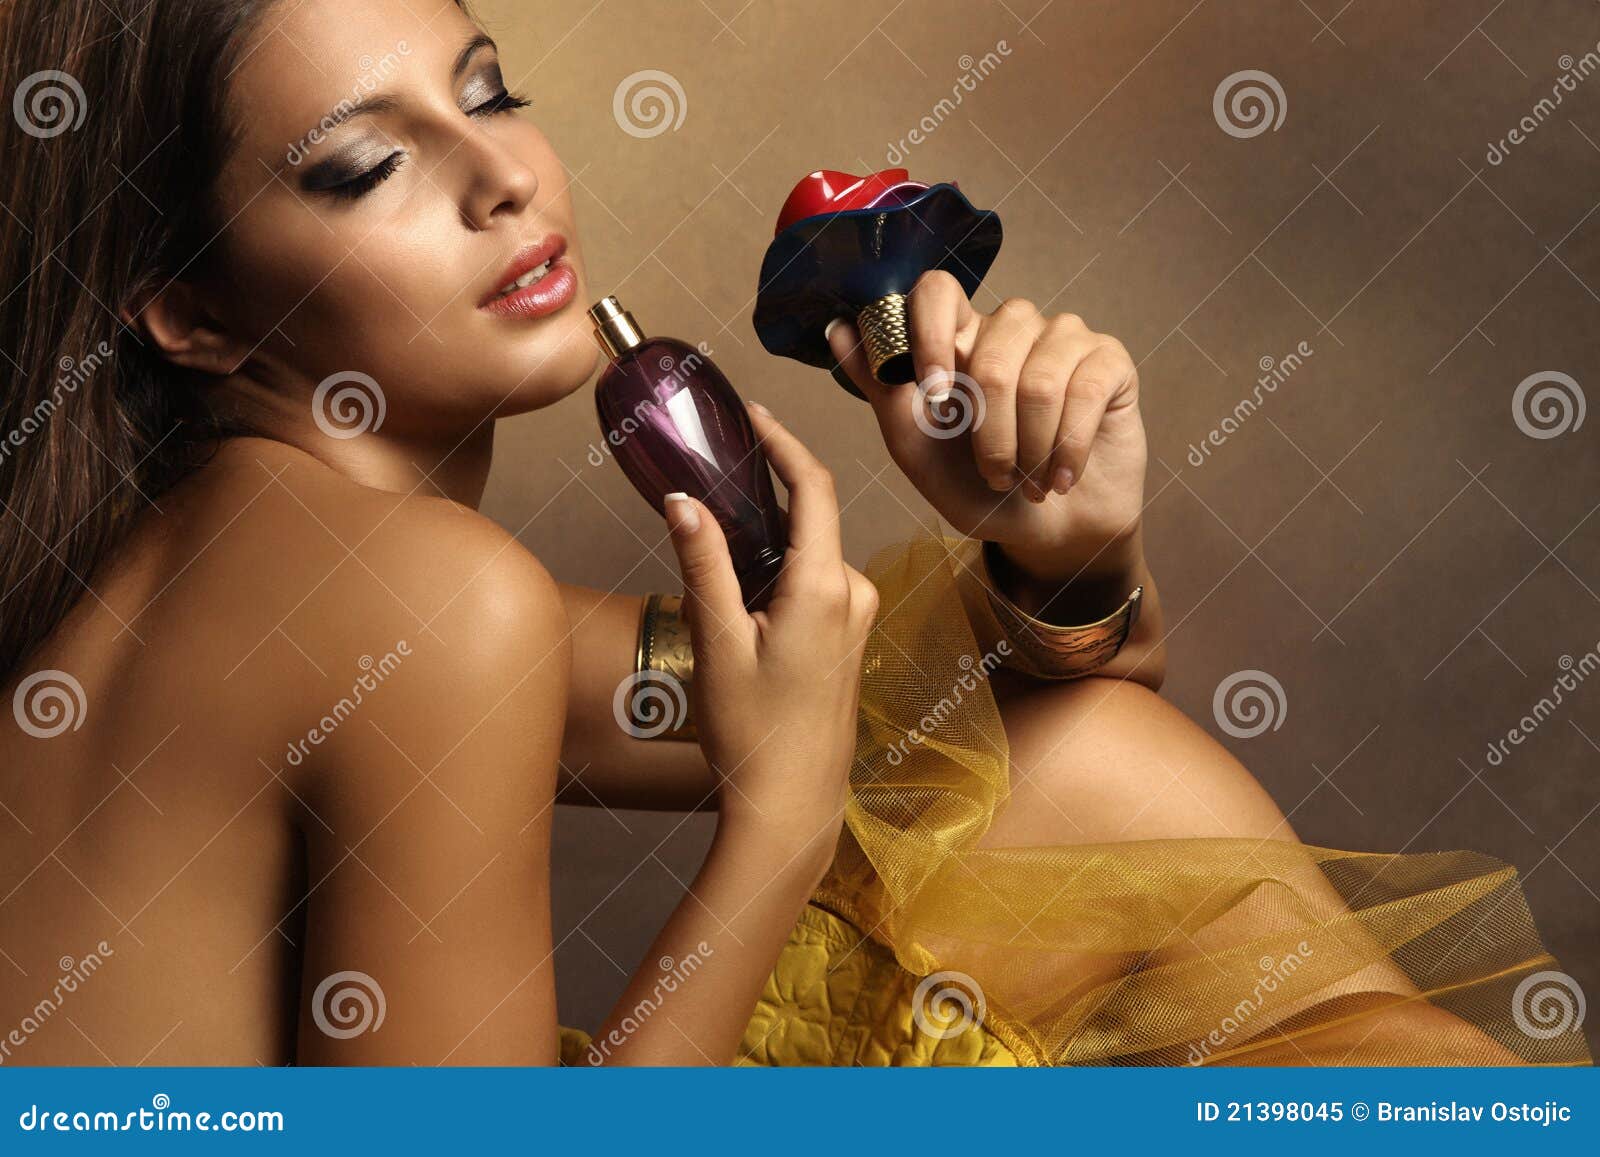 woman with perfume